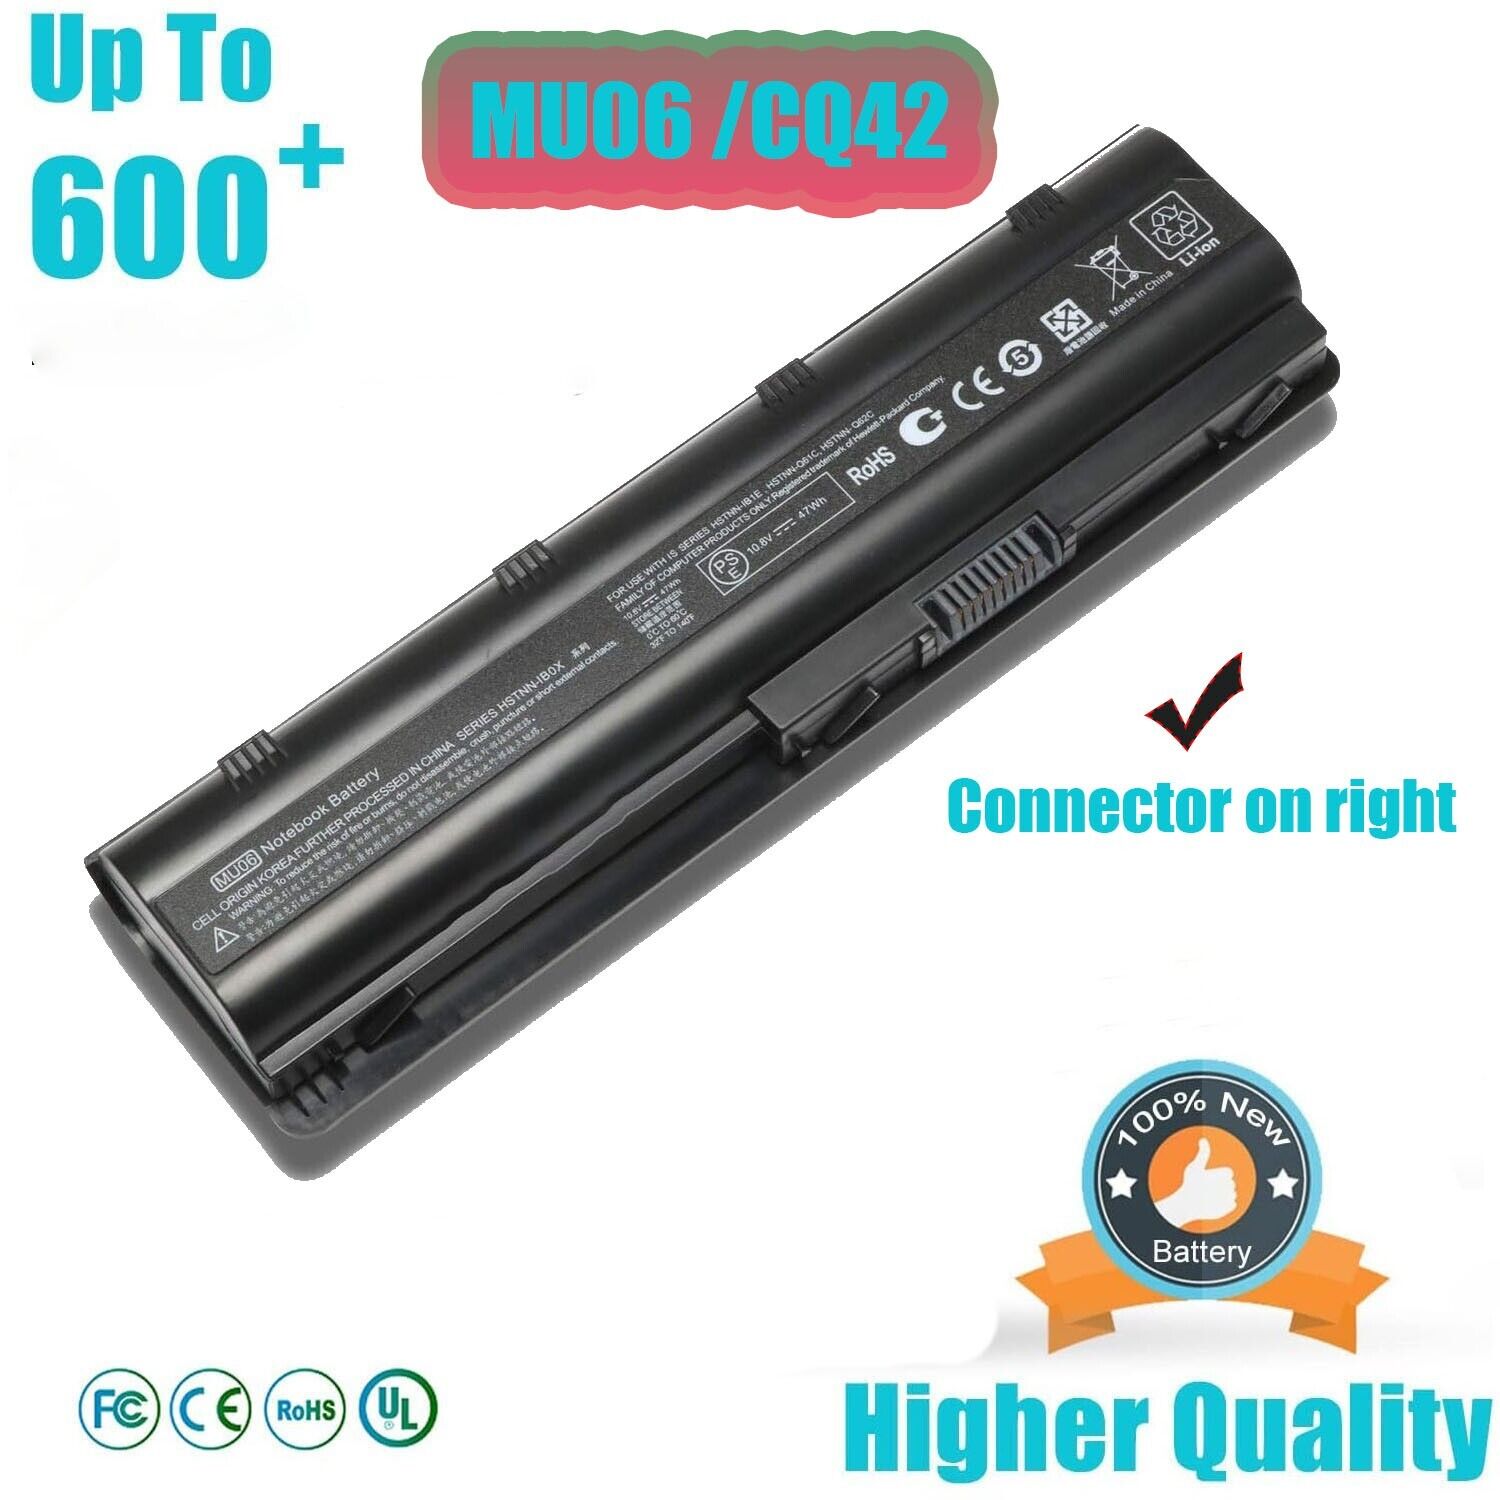 6 Cell Battery for HP MU06 MU09 SPARE 593554-001 593553-001 G62 CQ42 dv7-6000